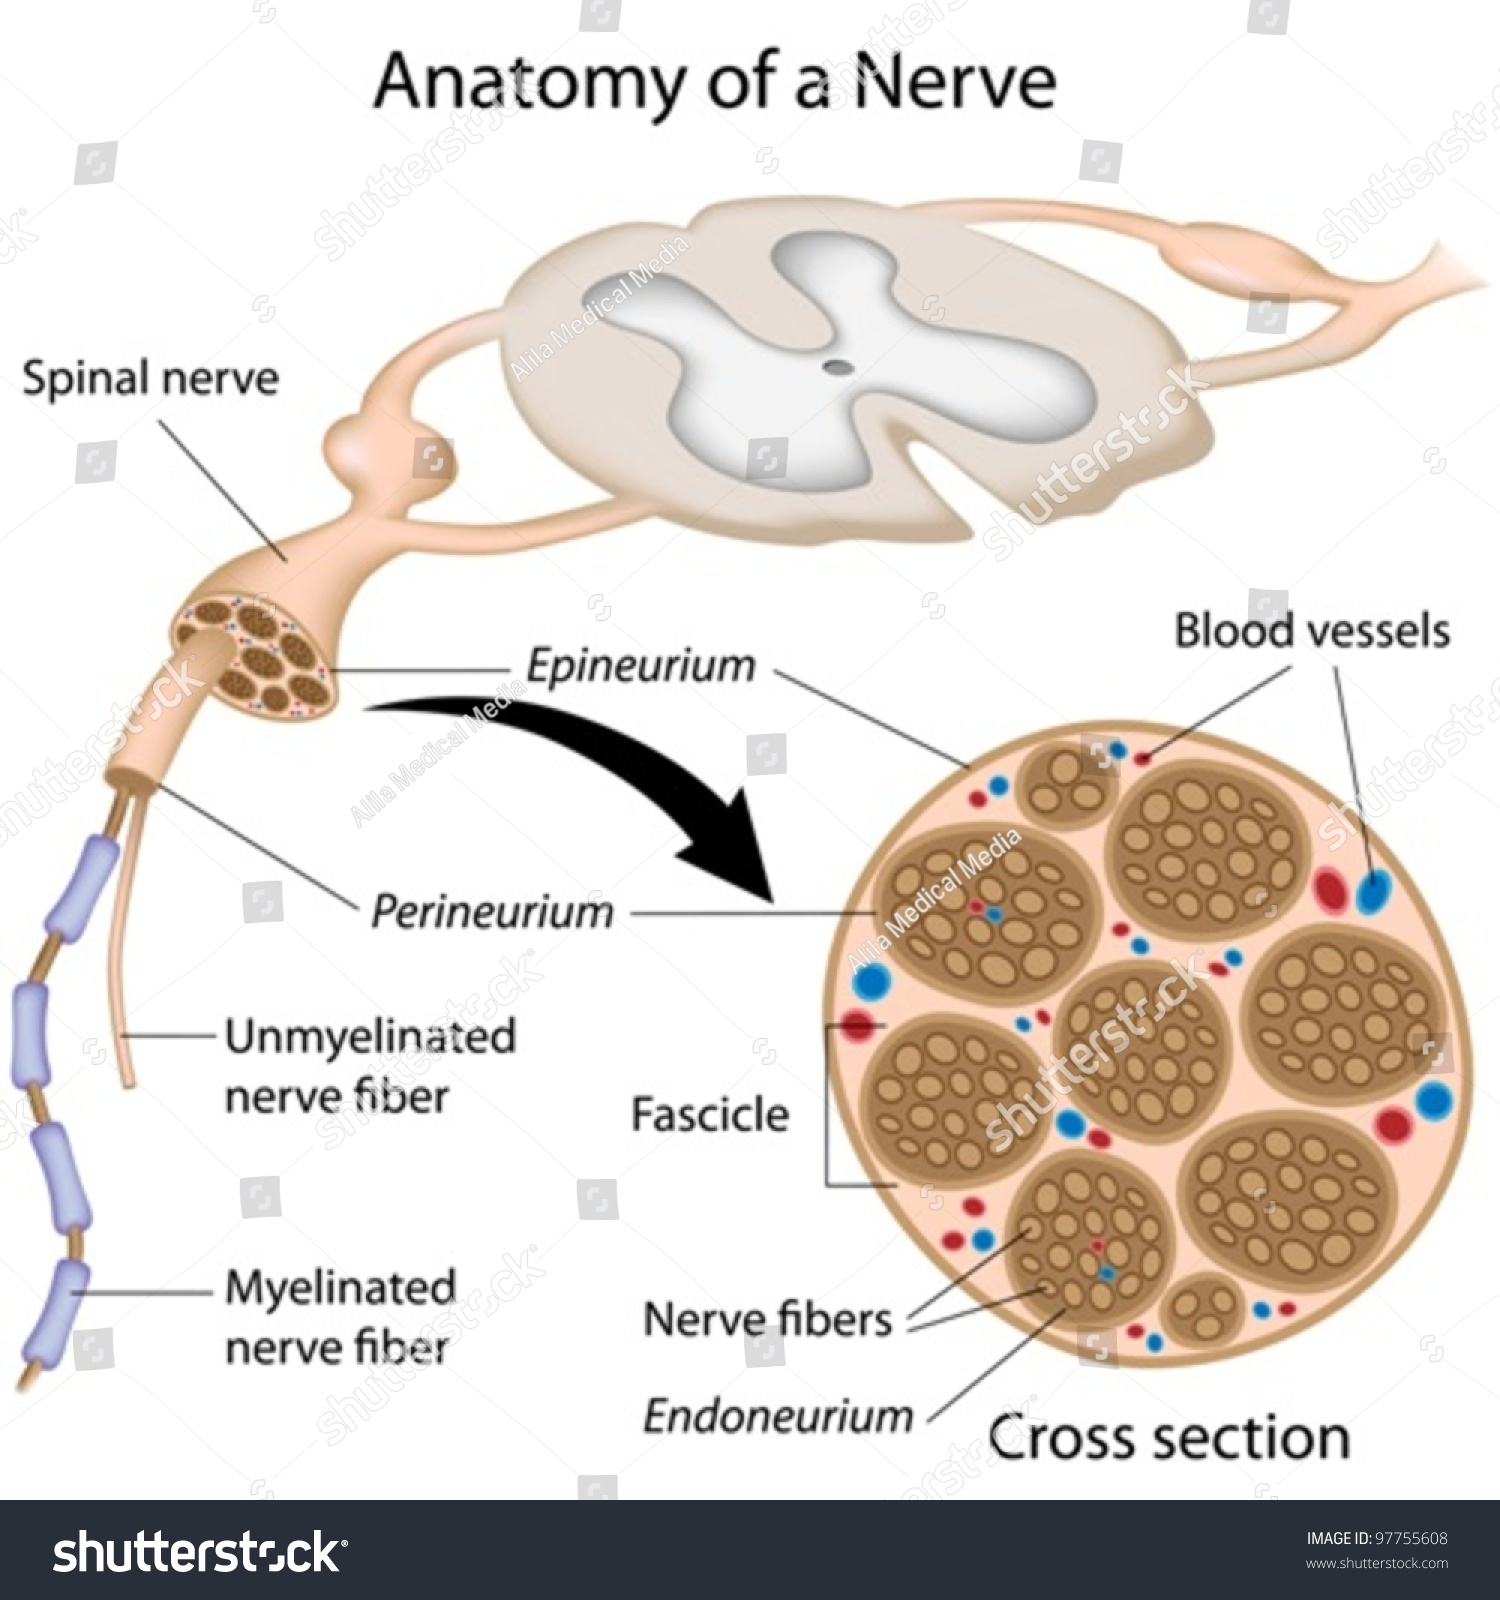 Anatomy Nerve Stock Vector 97755608 - Shutterstock